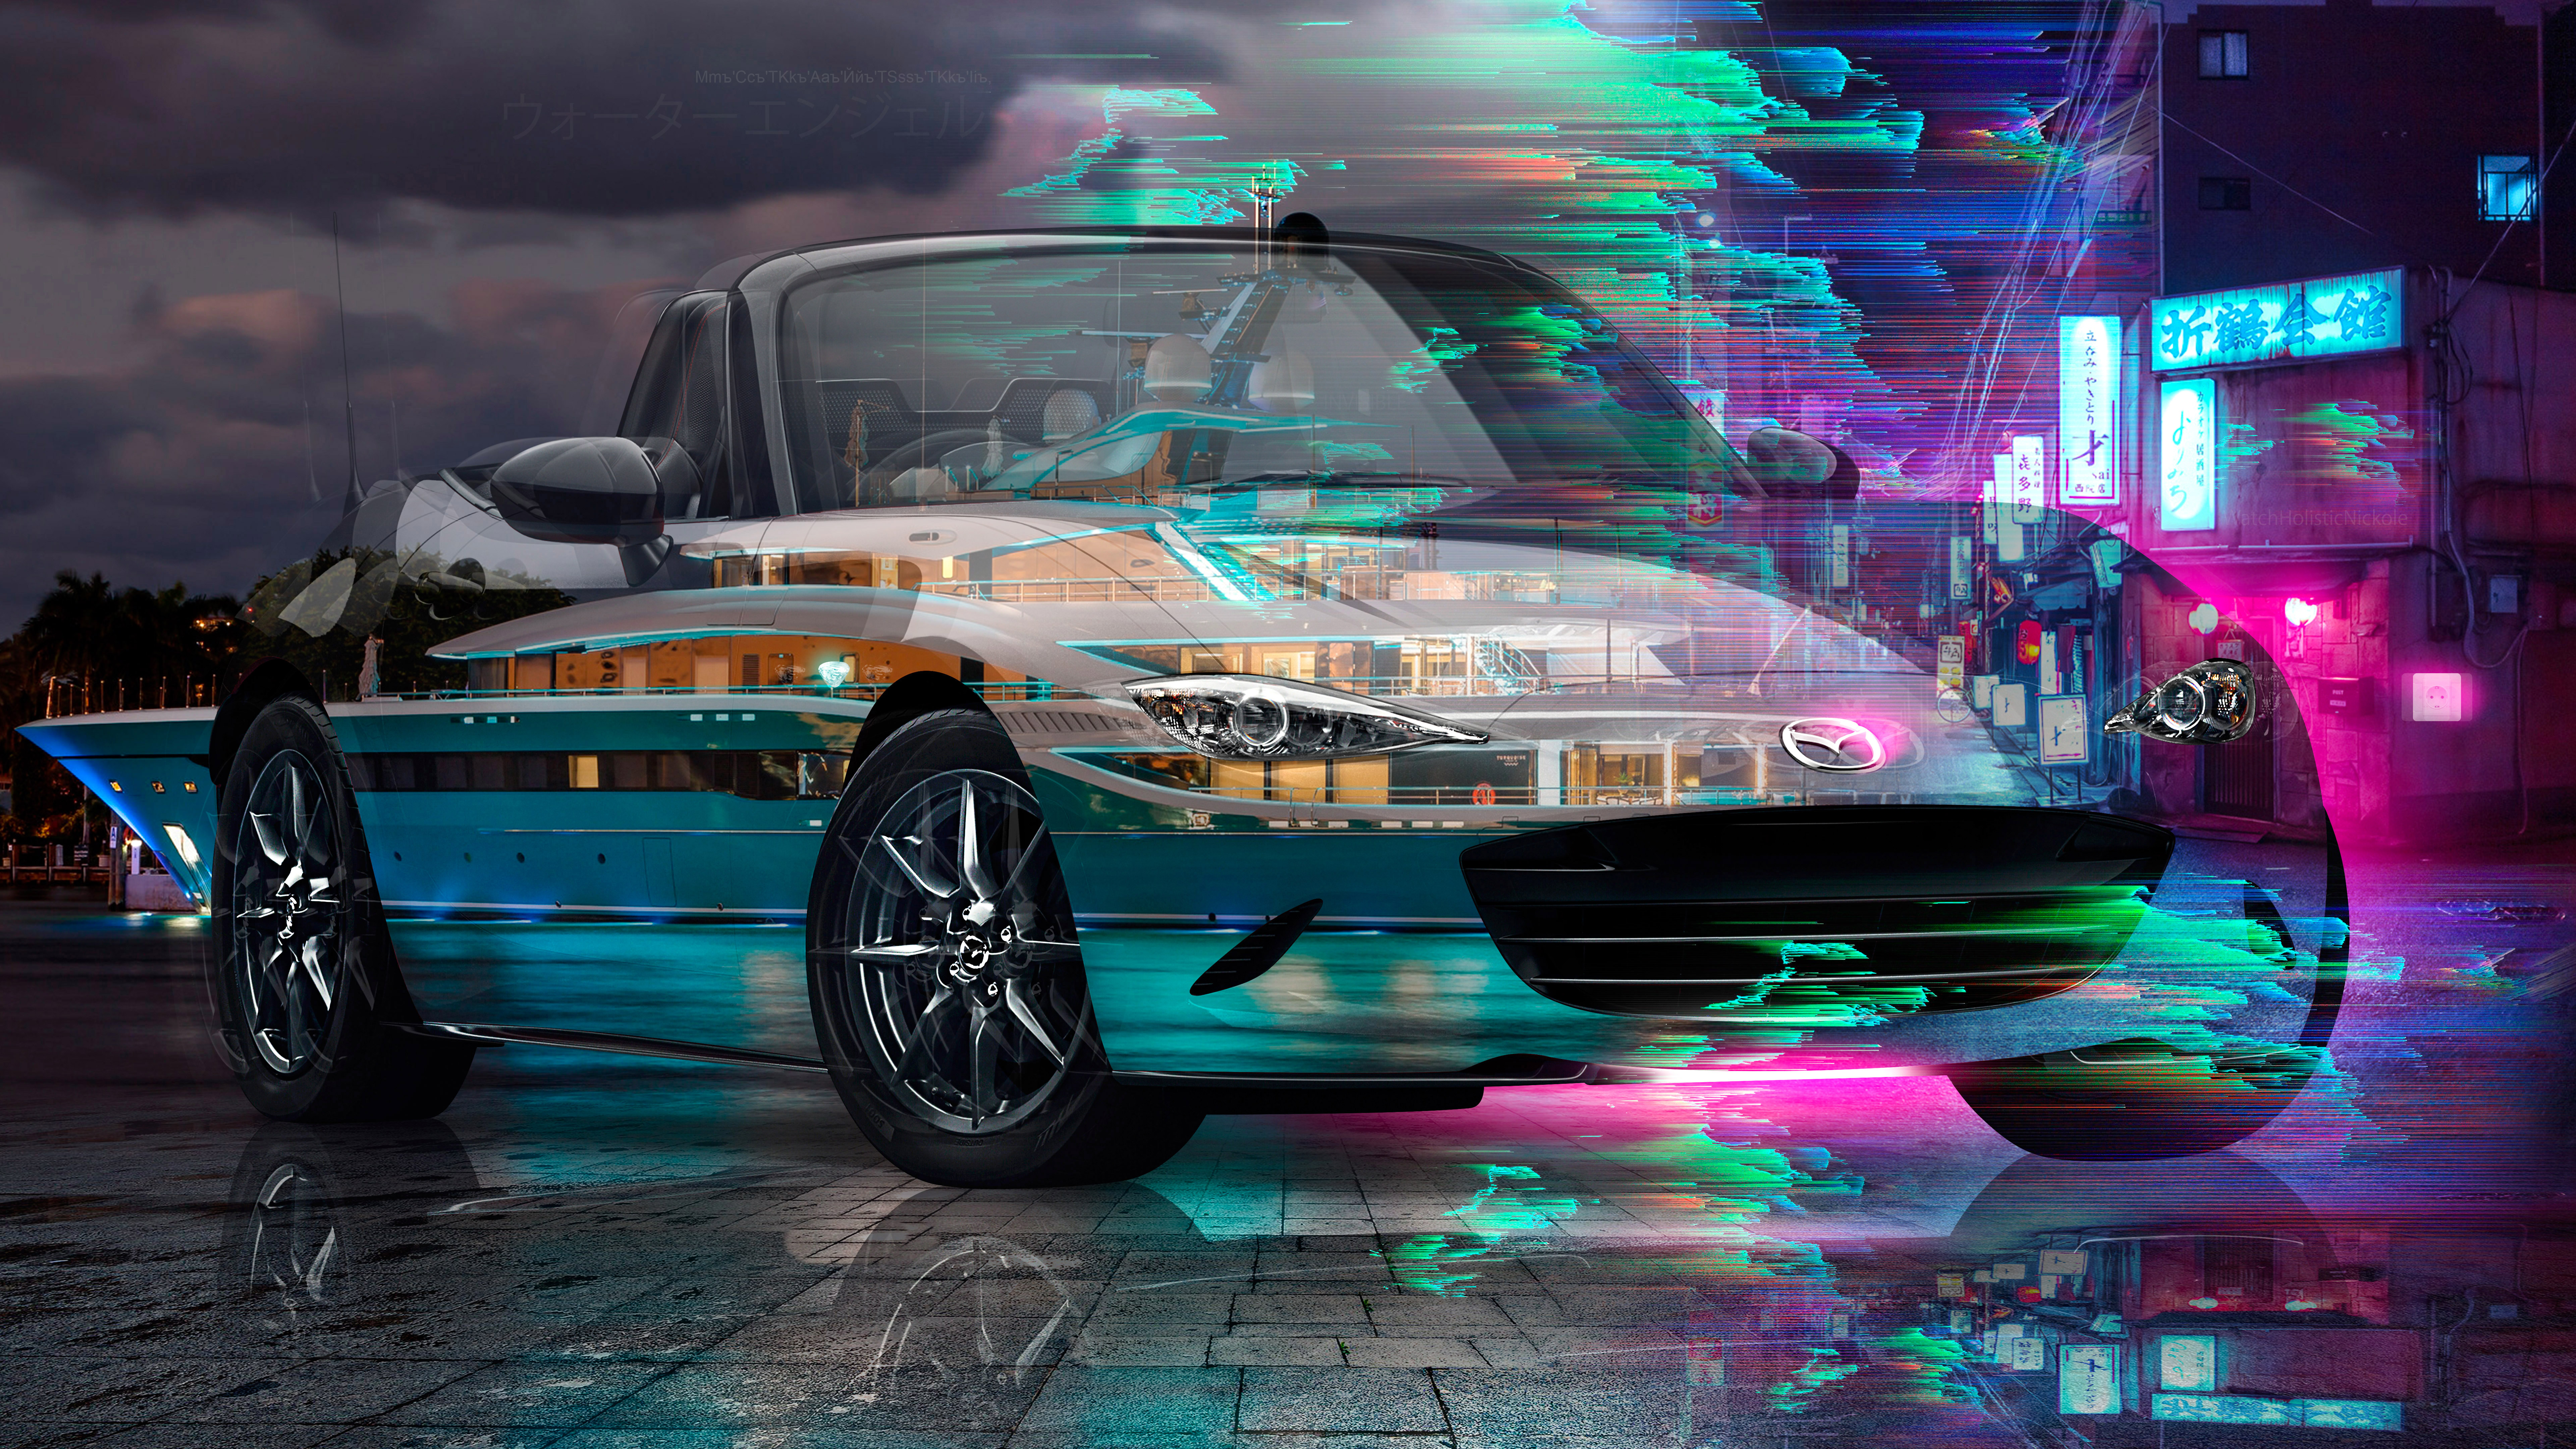 Mazda-MX5-Roadster-Super-Crystal-WaterAngel-GoYacht-77m-Turquoise-Japan-Glich-Neon-Car-2023